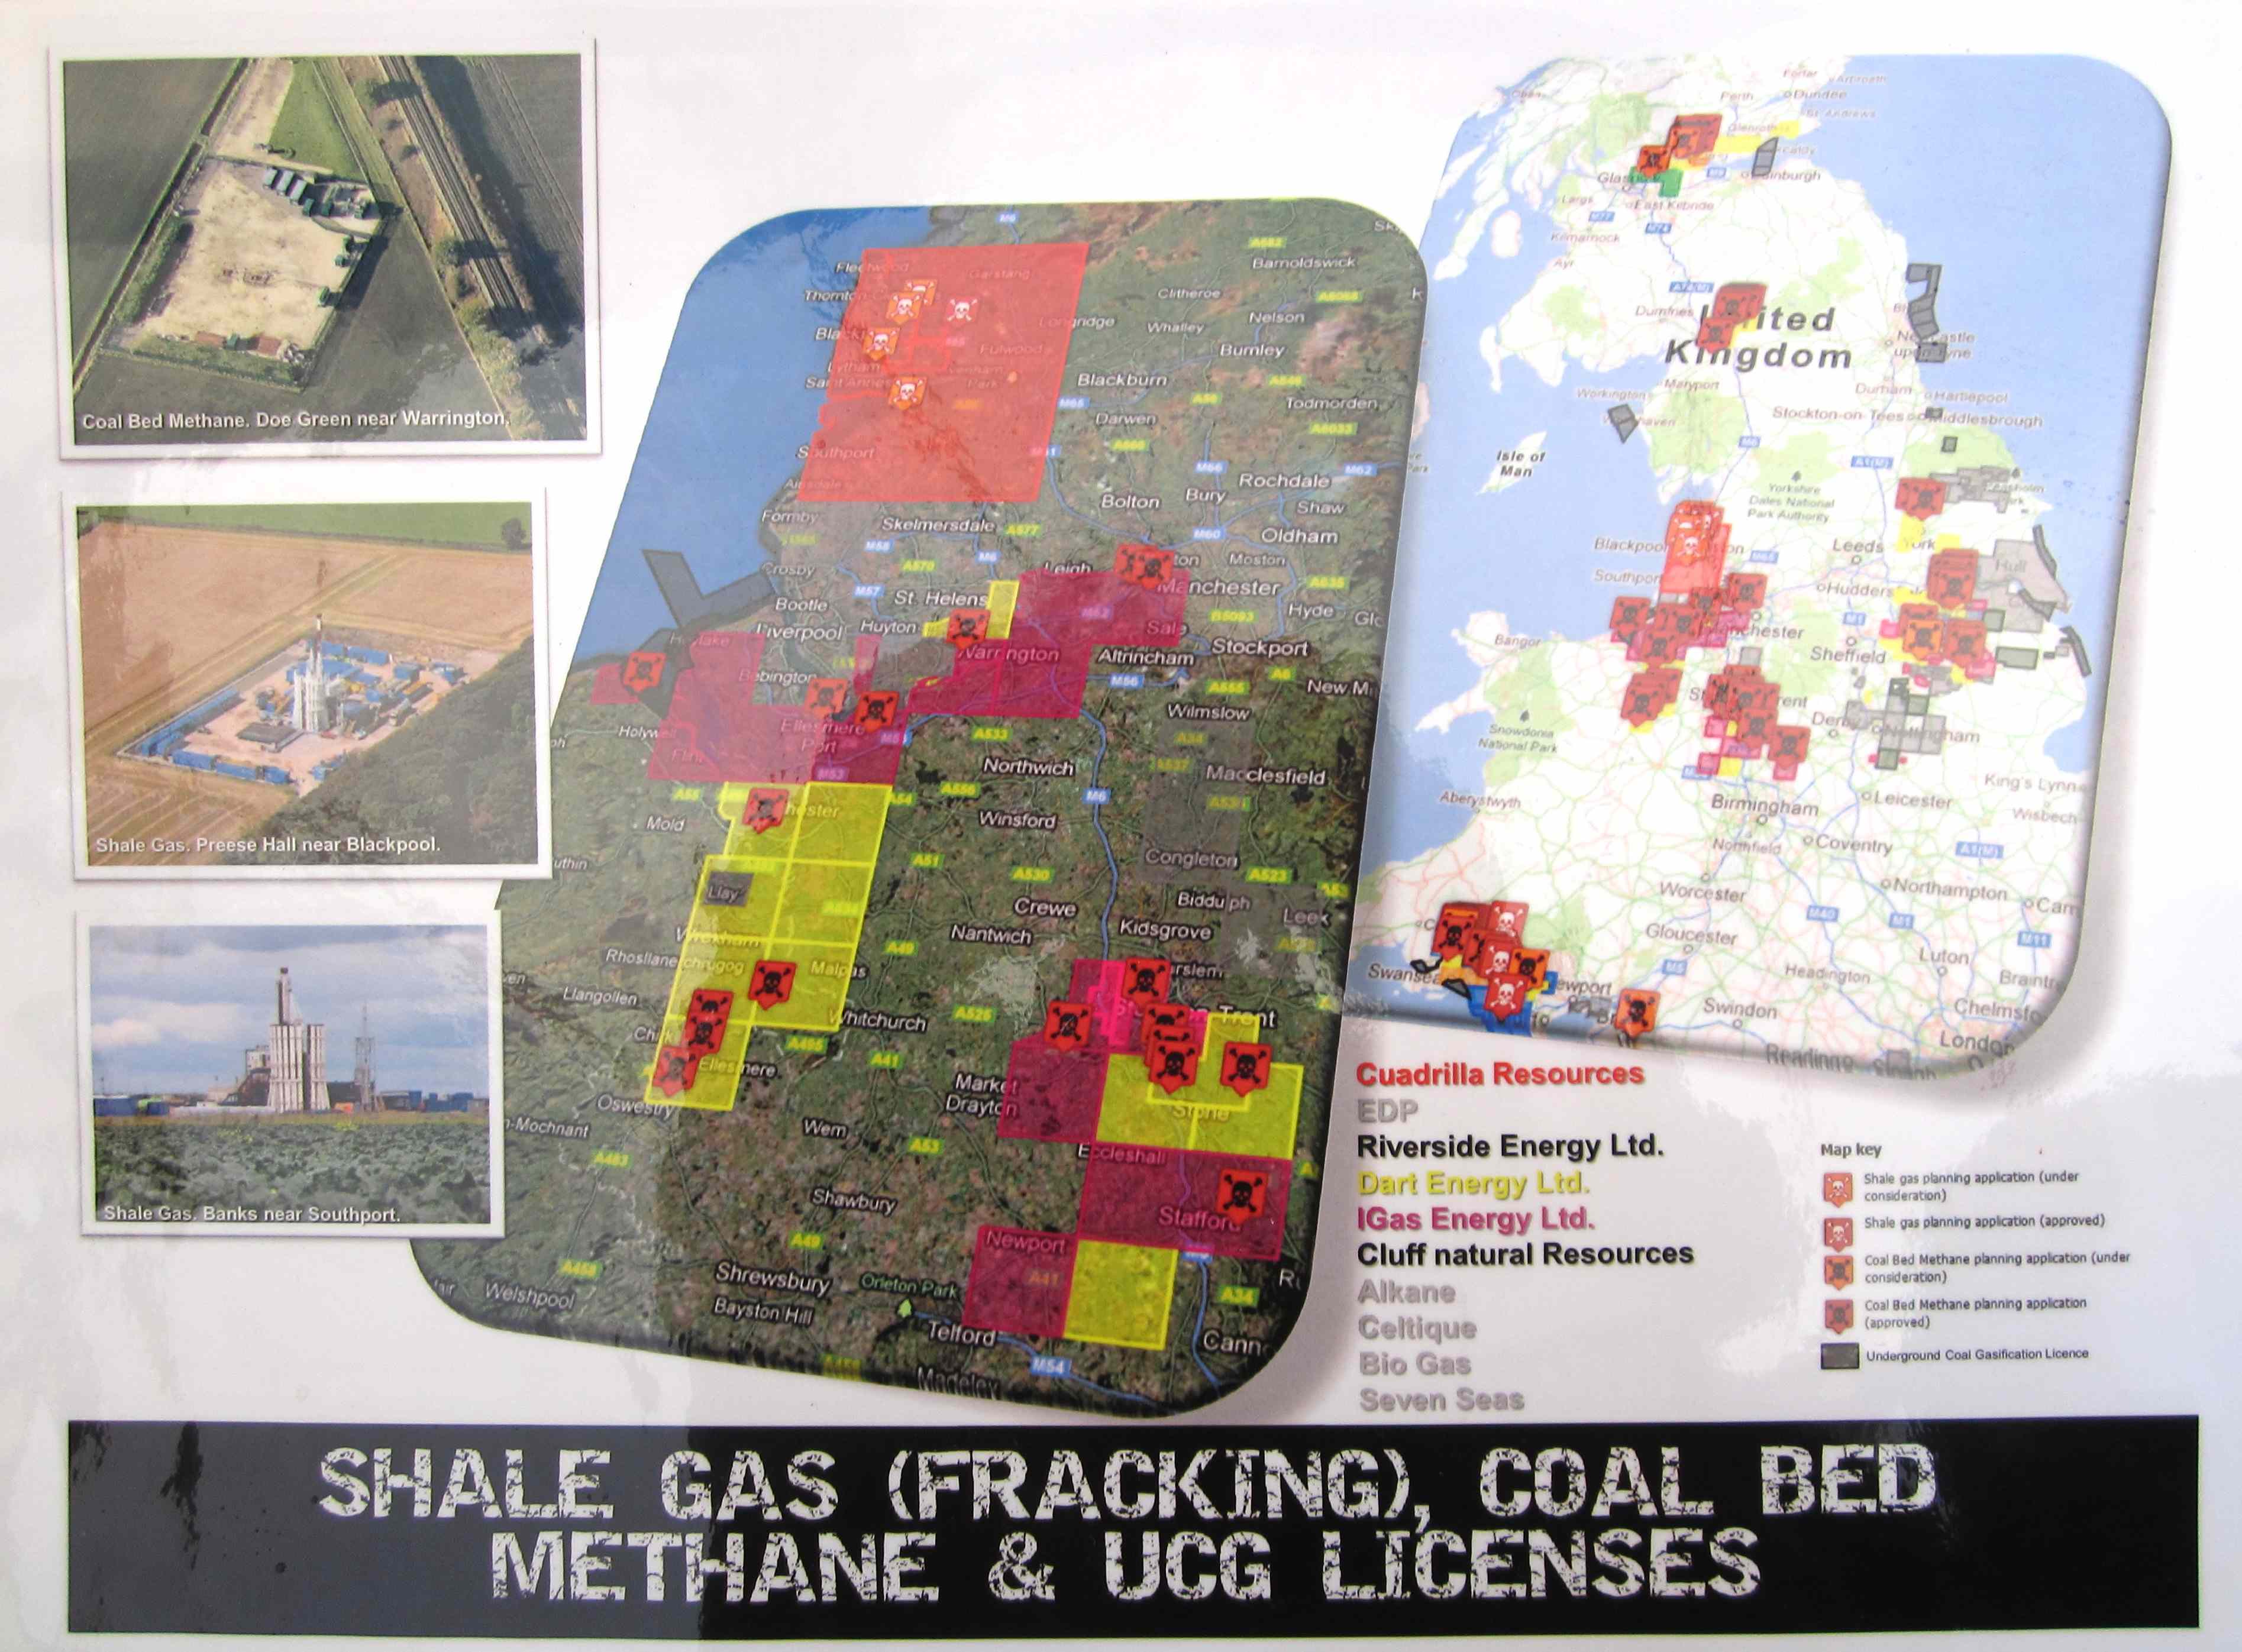 Shale Gas (fracking), Coal Bed Methane & UCG Licenses